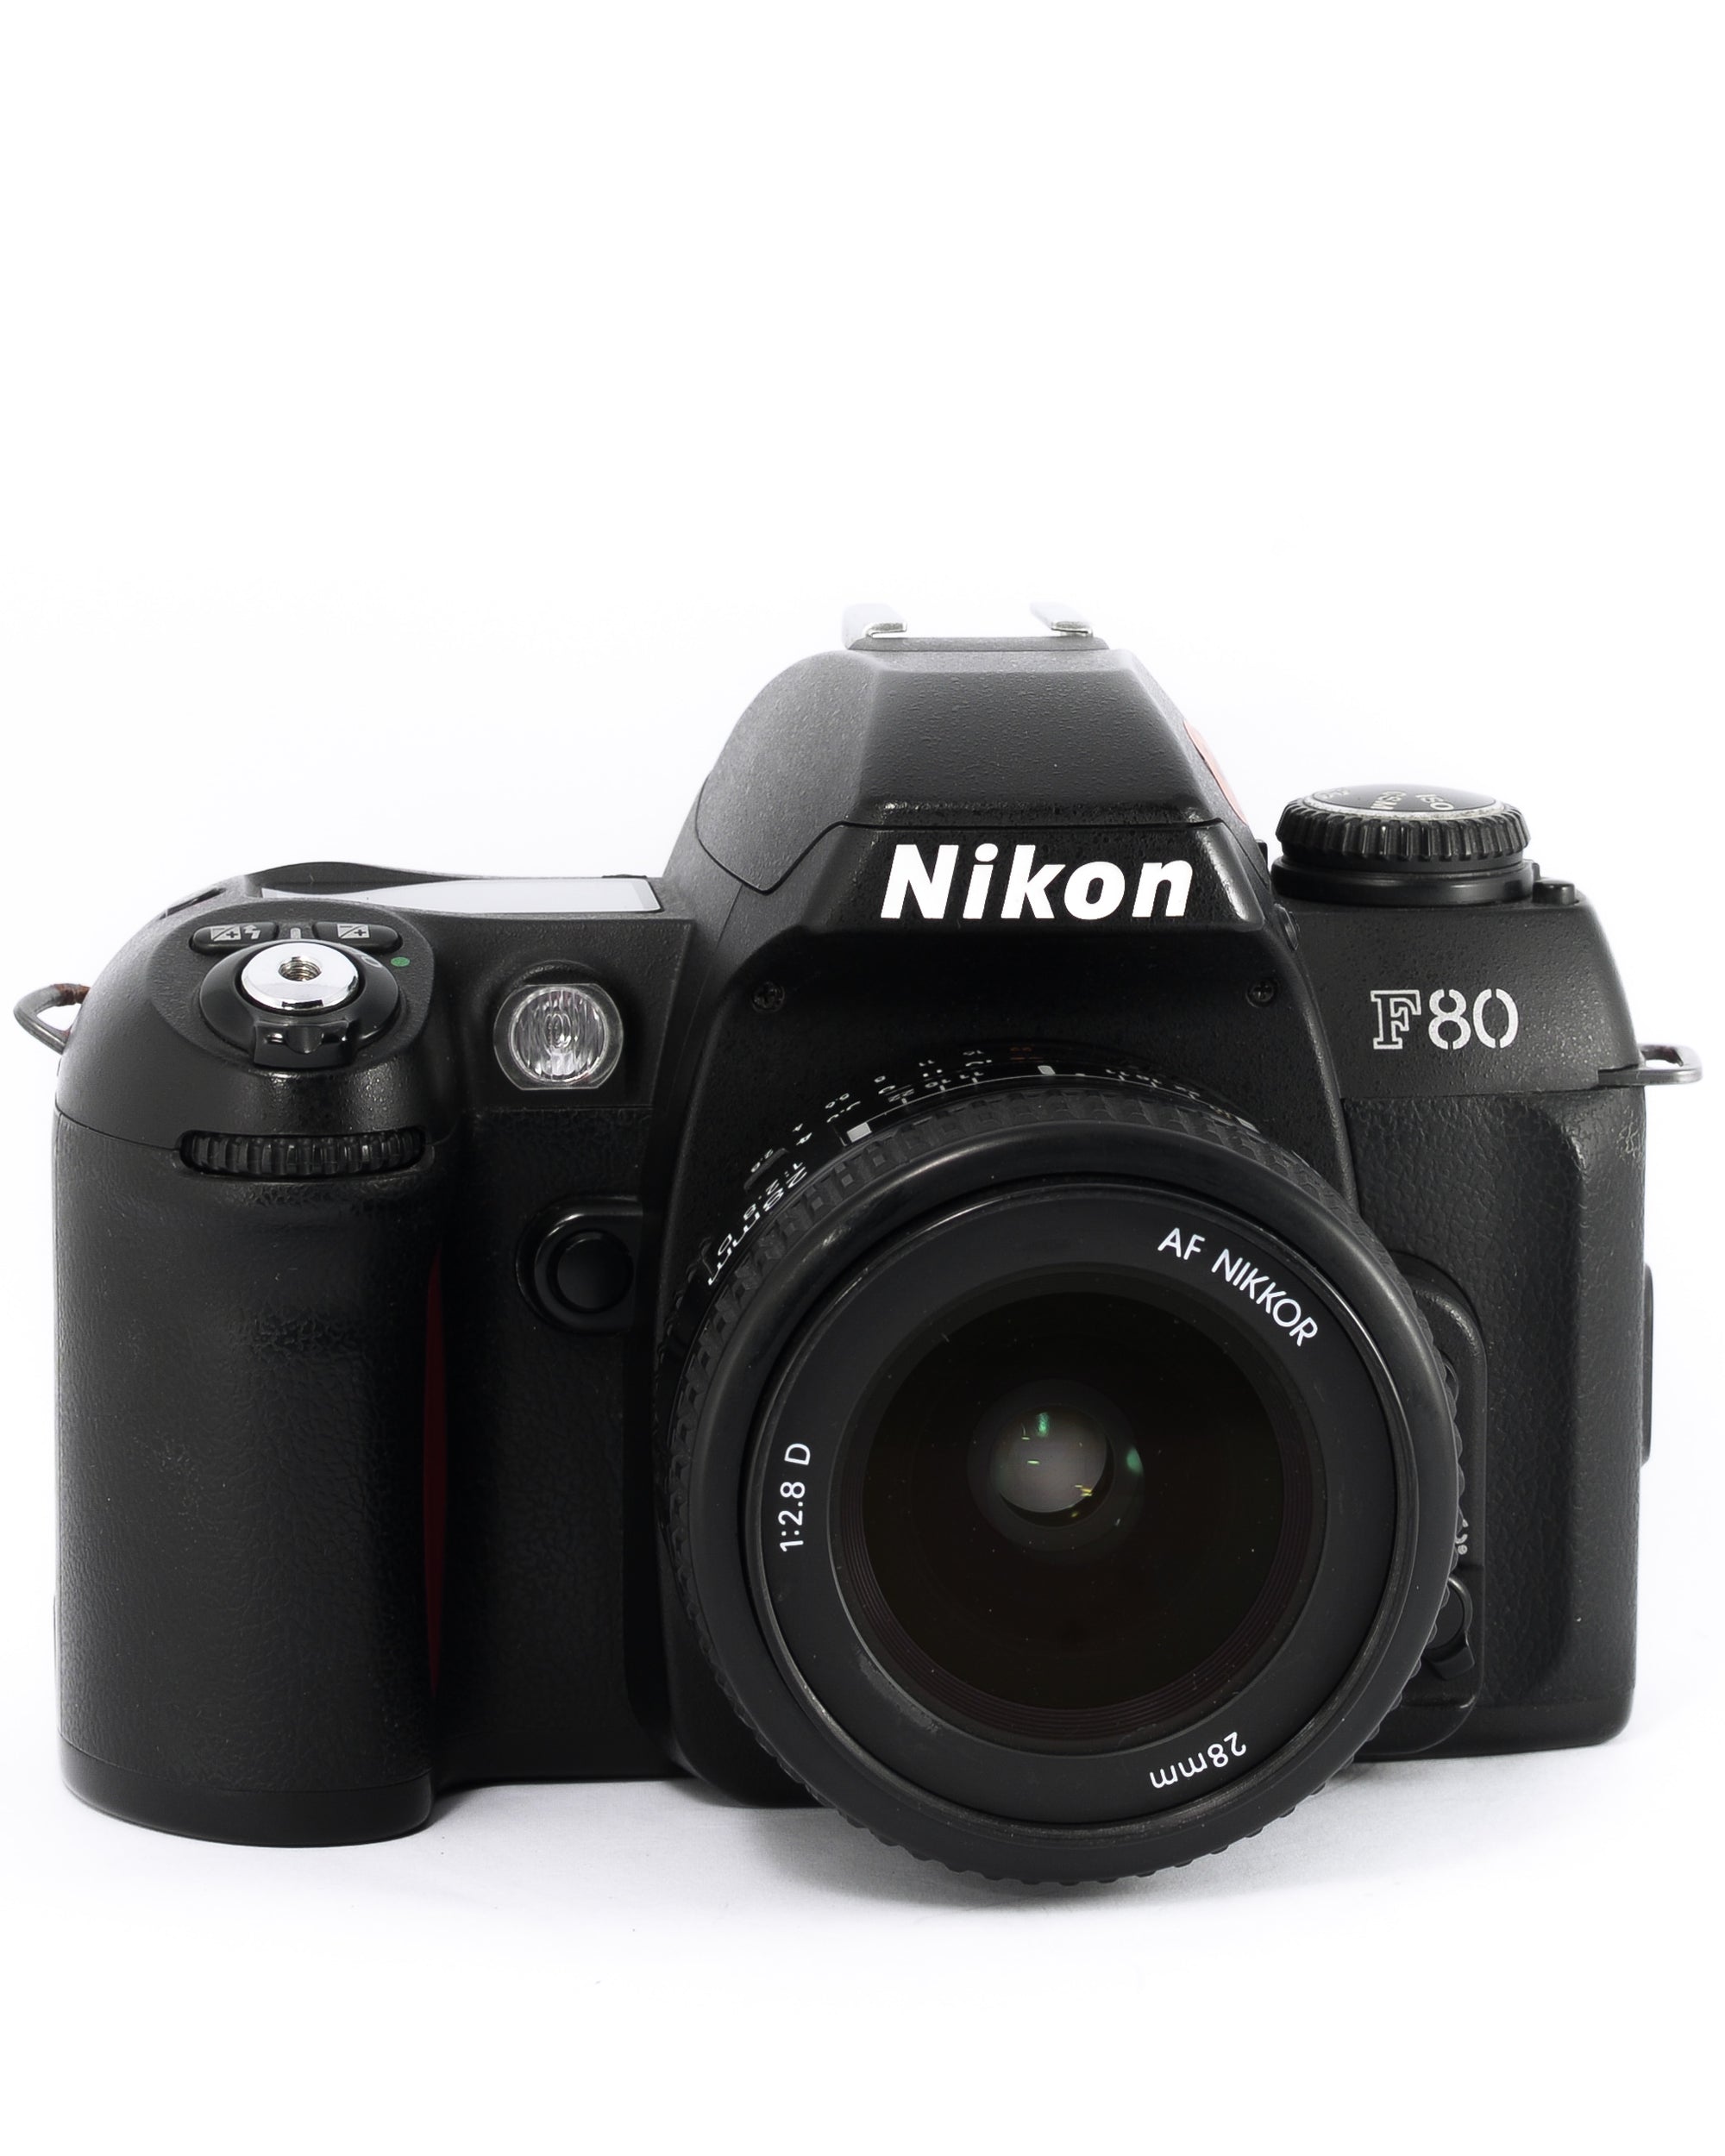 Nikon F80 35mm SLR film camera with 28mm f2.8 lens